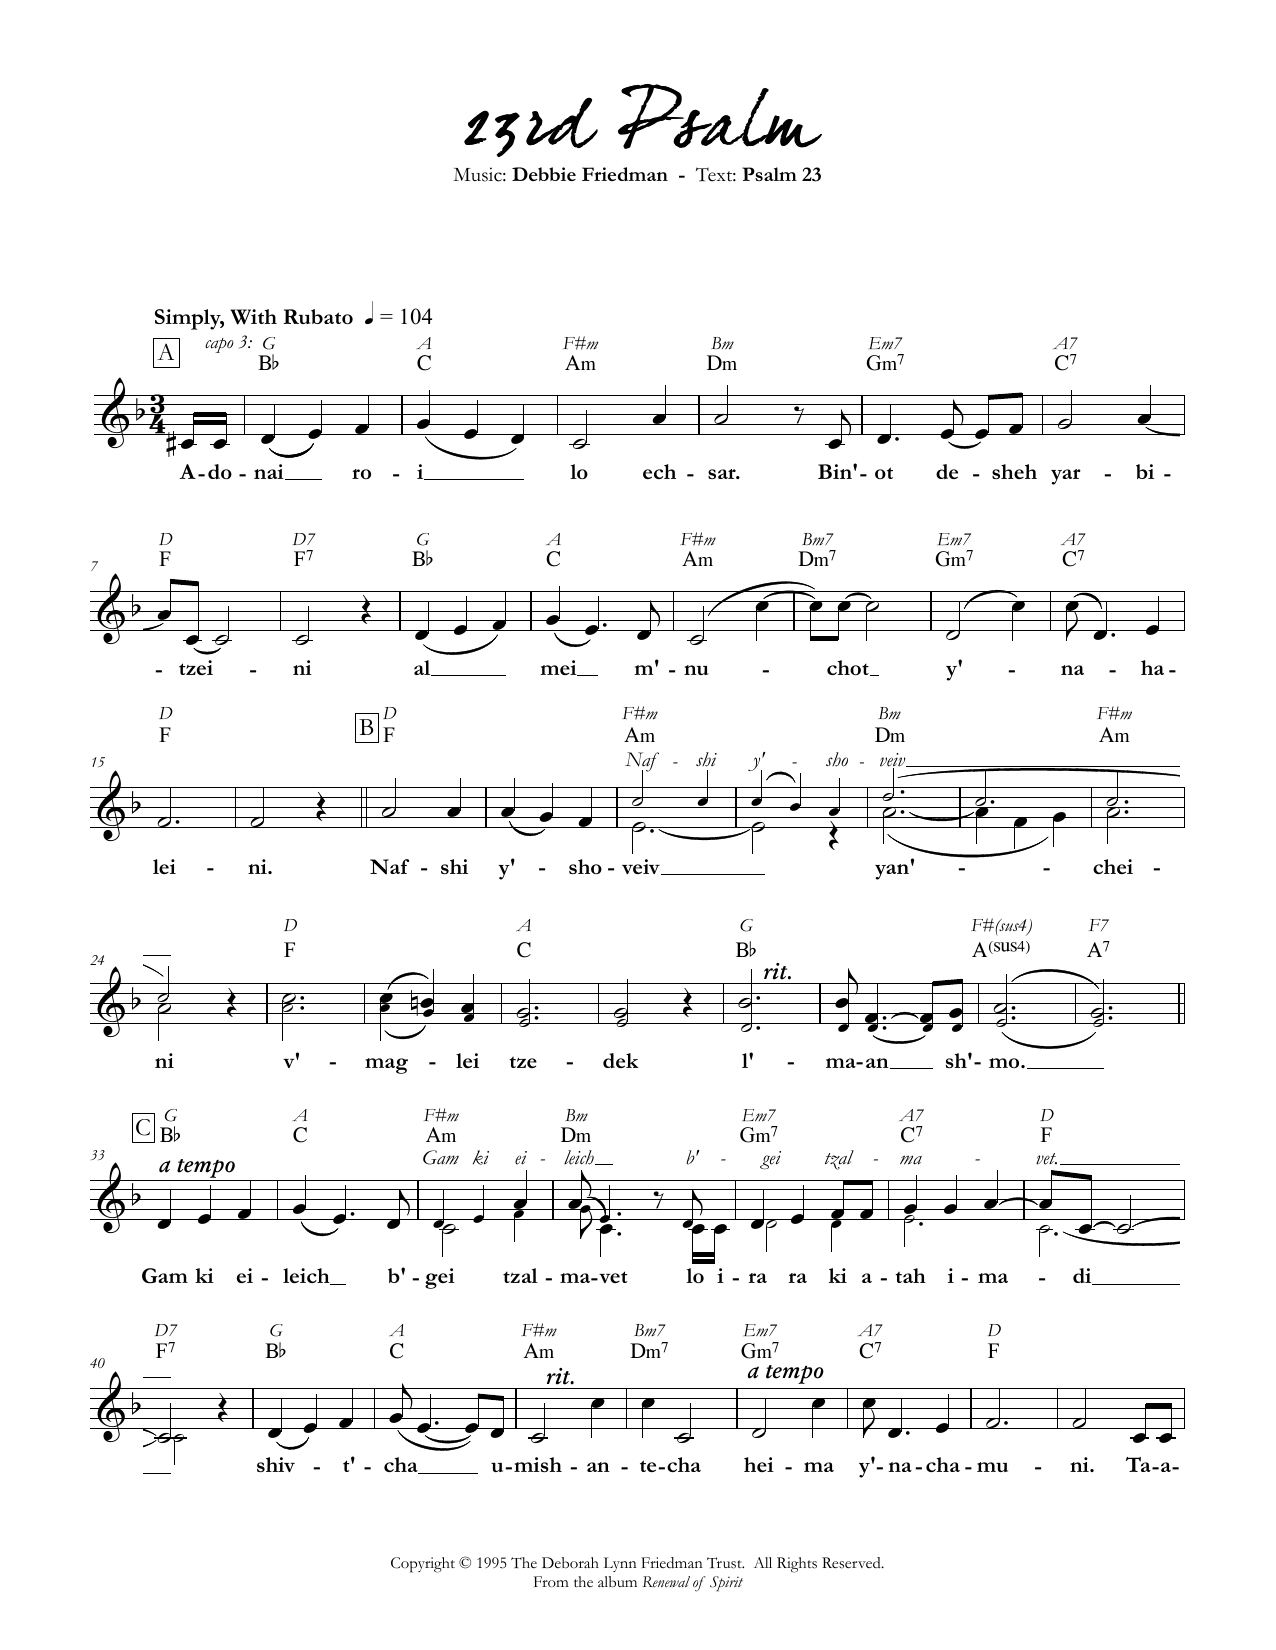 Download Debbie Friedman 23rd Psalm Sheet Music